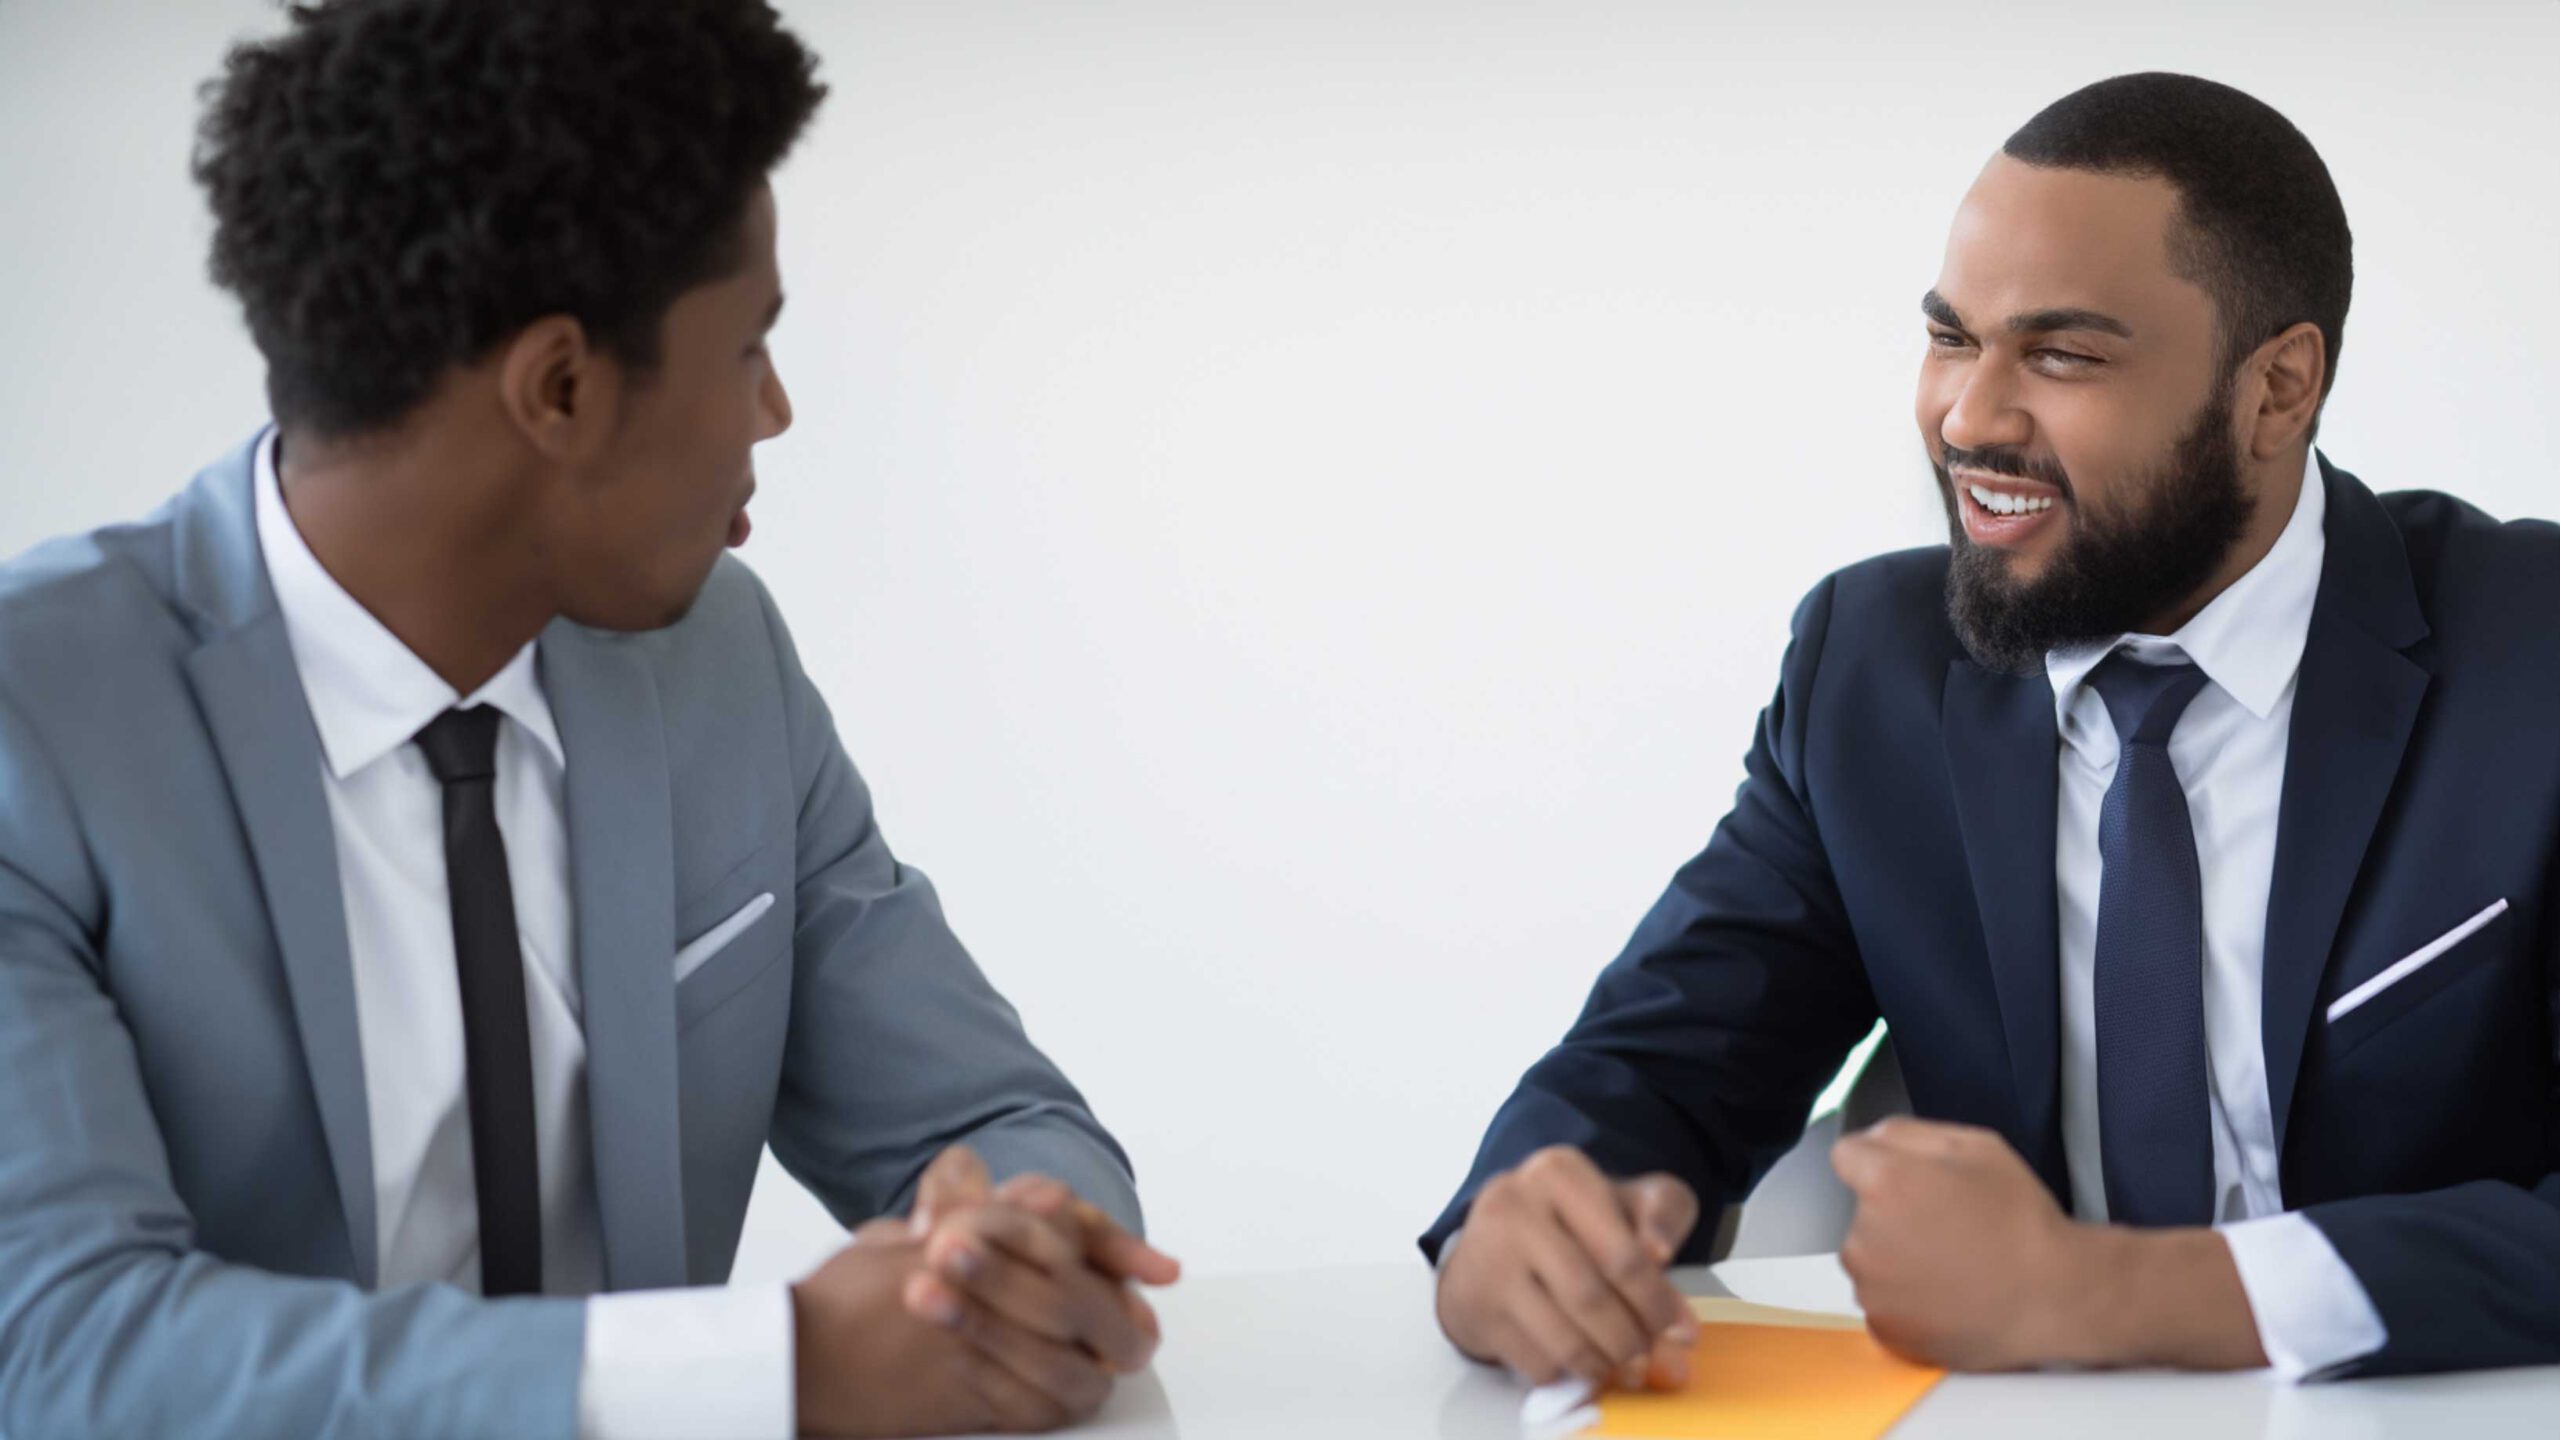 10 Tips to Nail job interview